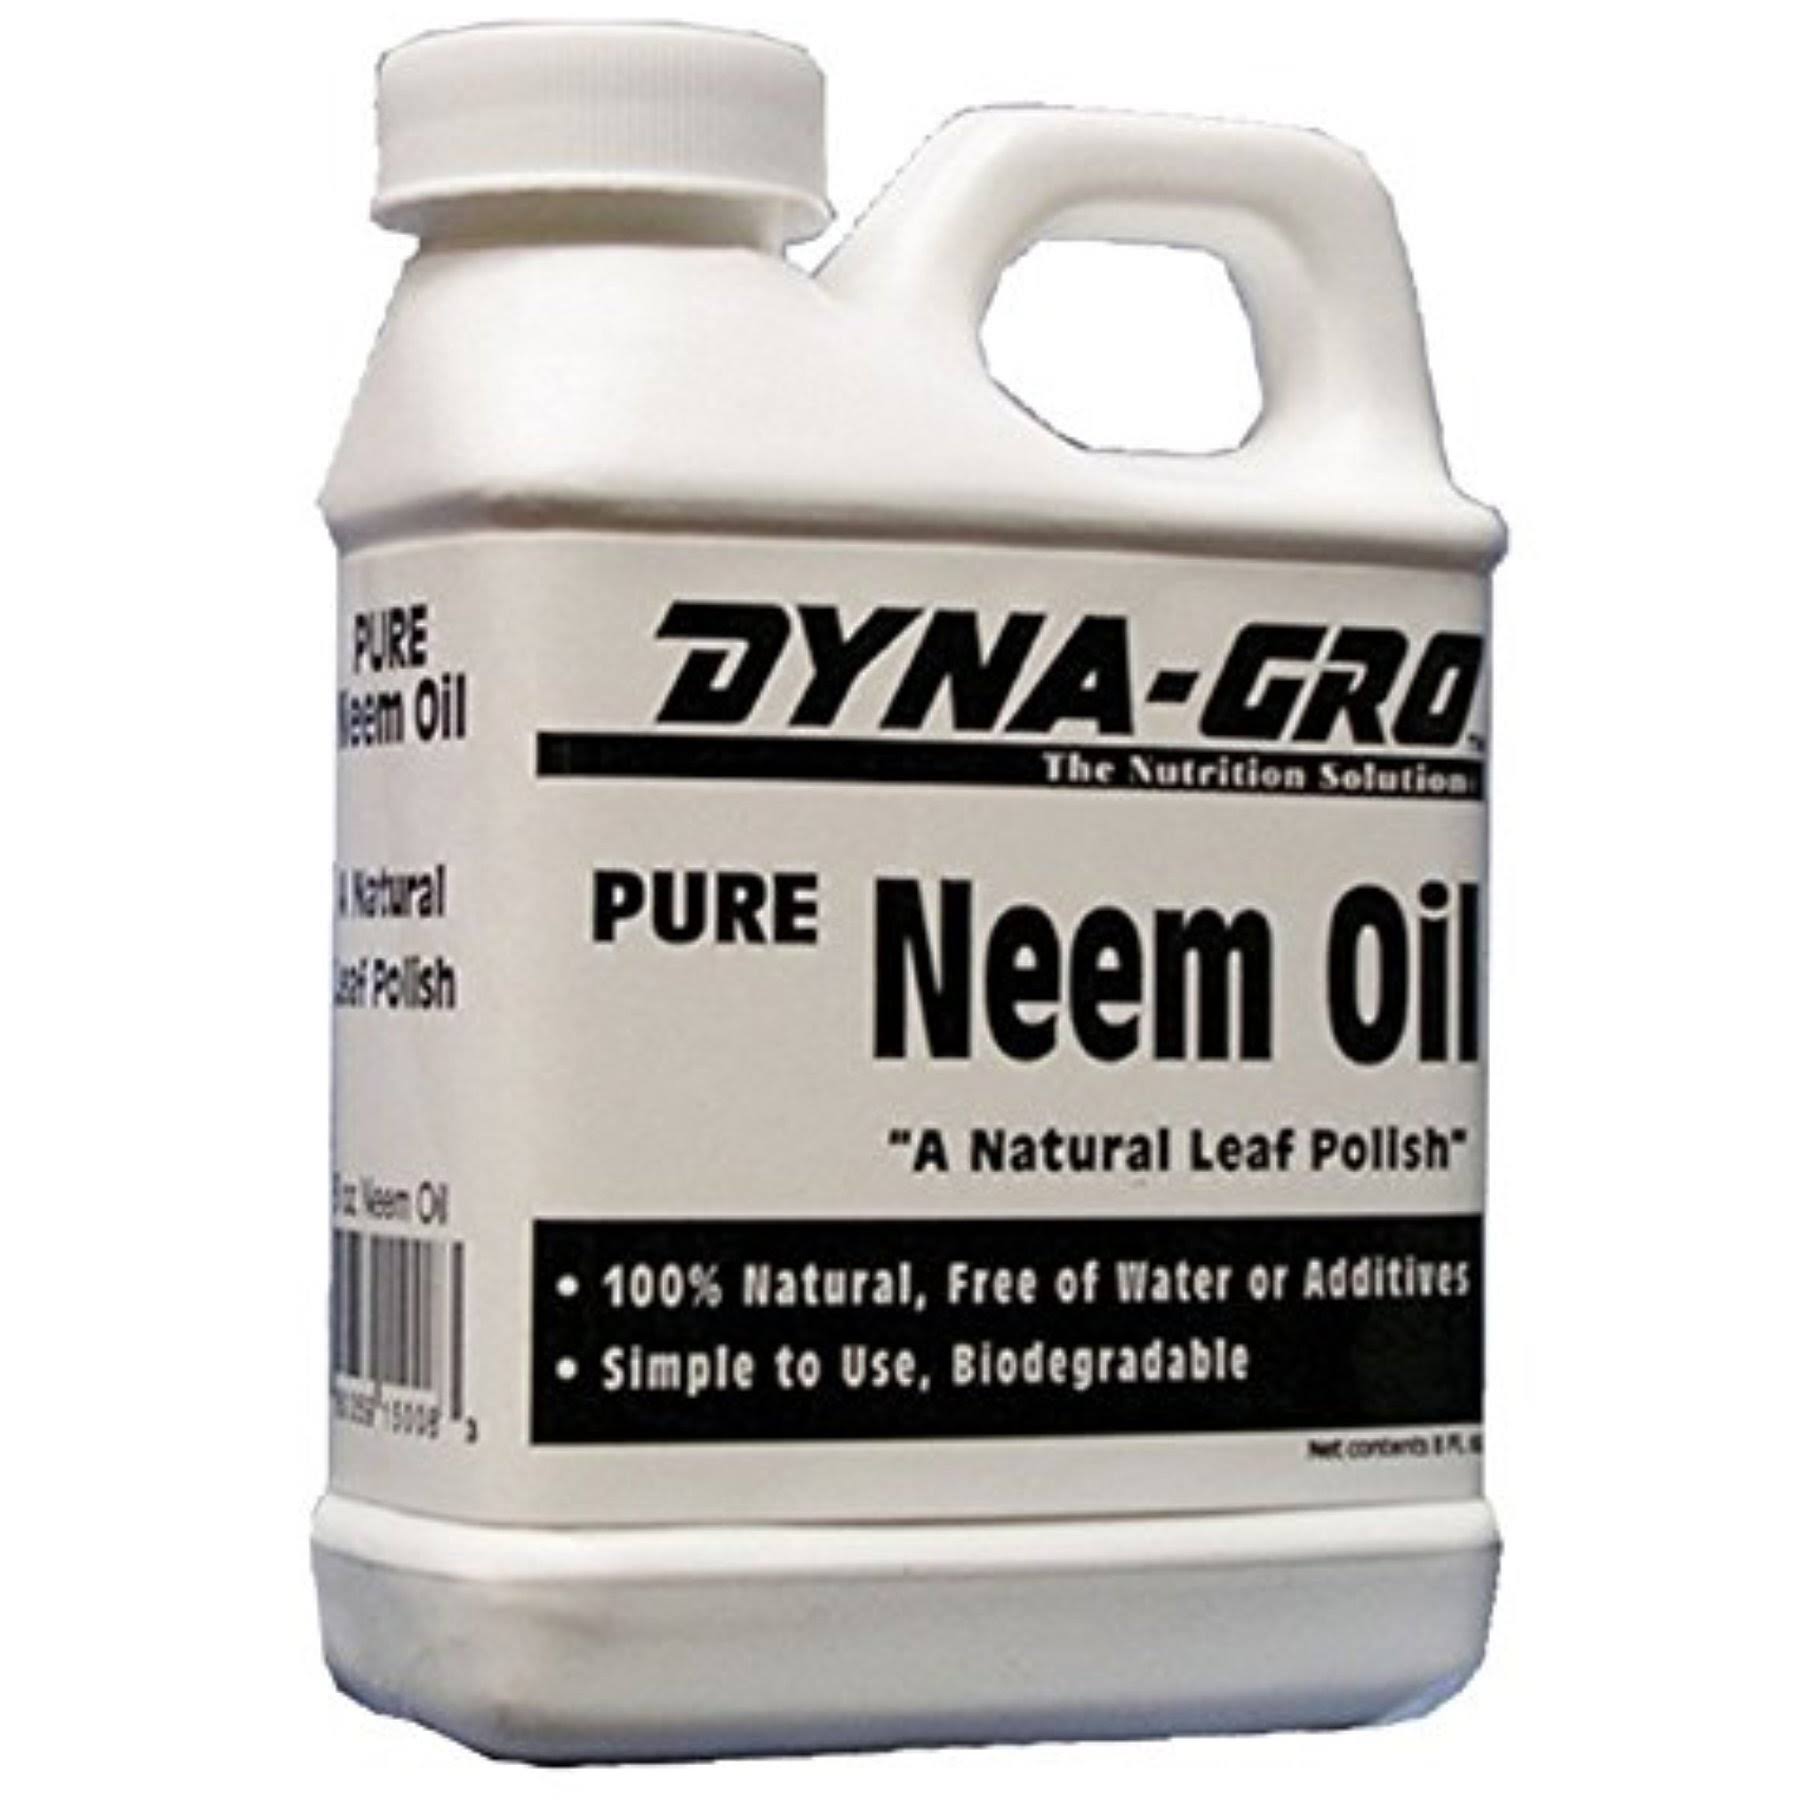 Dyna-Gro Pure Neem Oil Natural Leaf Polish - 8oz